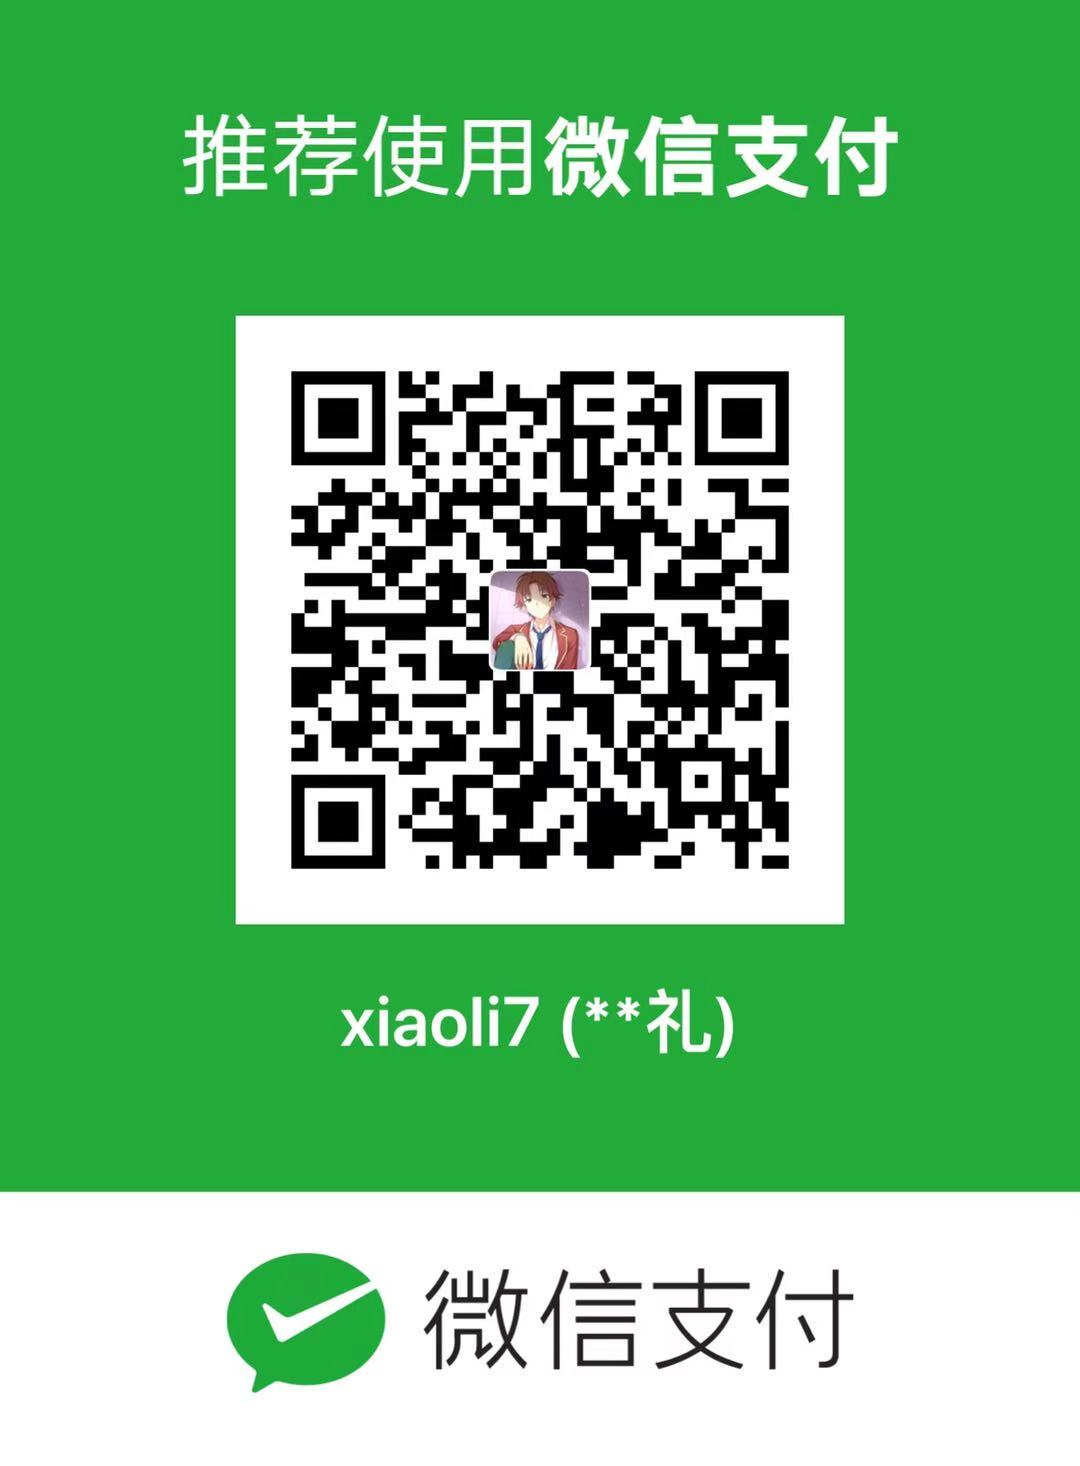 xiaoli7 WeChat Pay